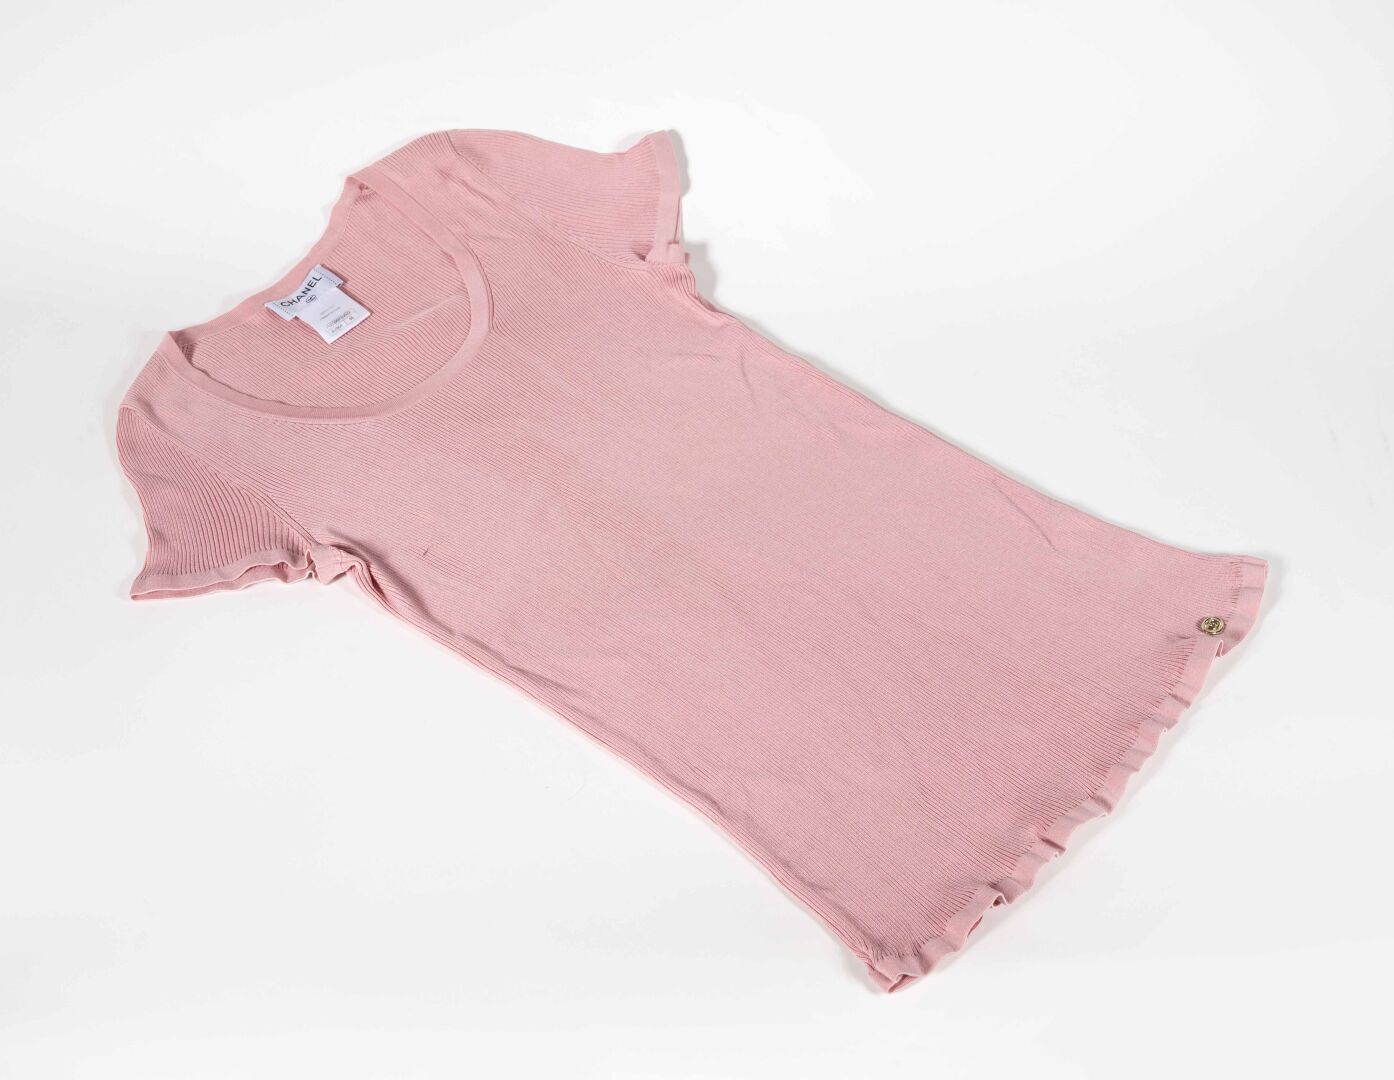 CHANEL 粉红色棉和涤纶T恤，46码

状况良好，正面有小污点